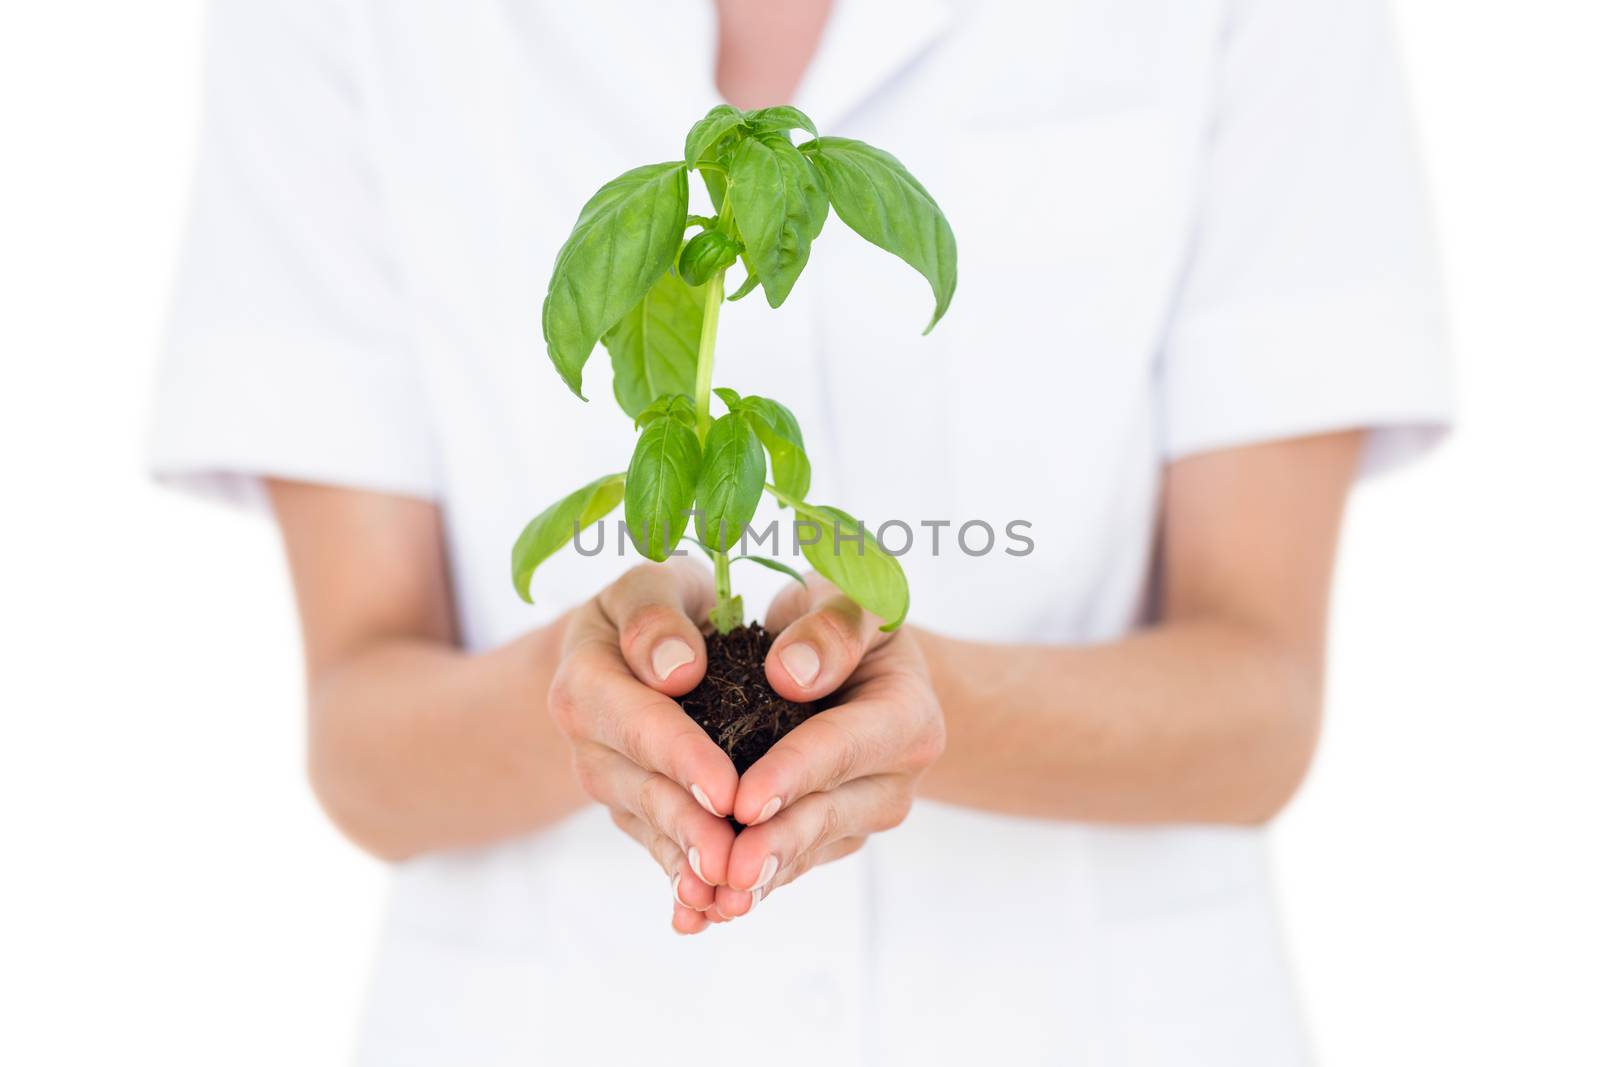 Scientist holding basil plant by Wavebreakmedia